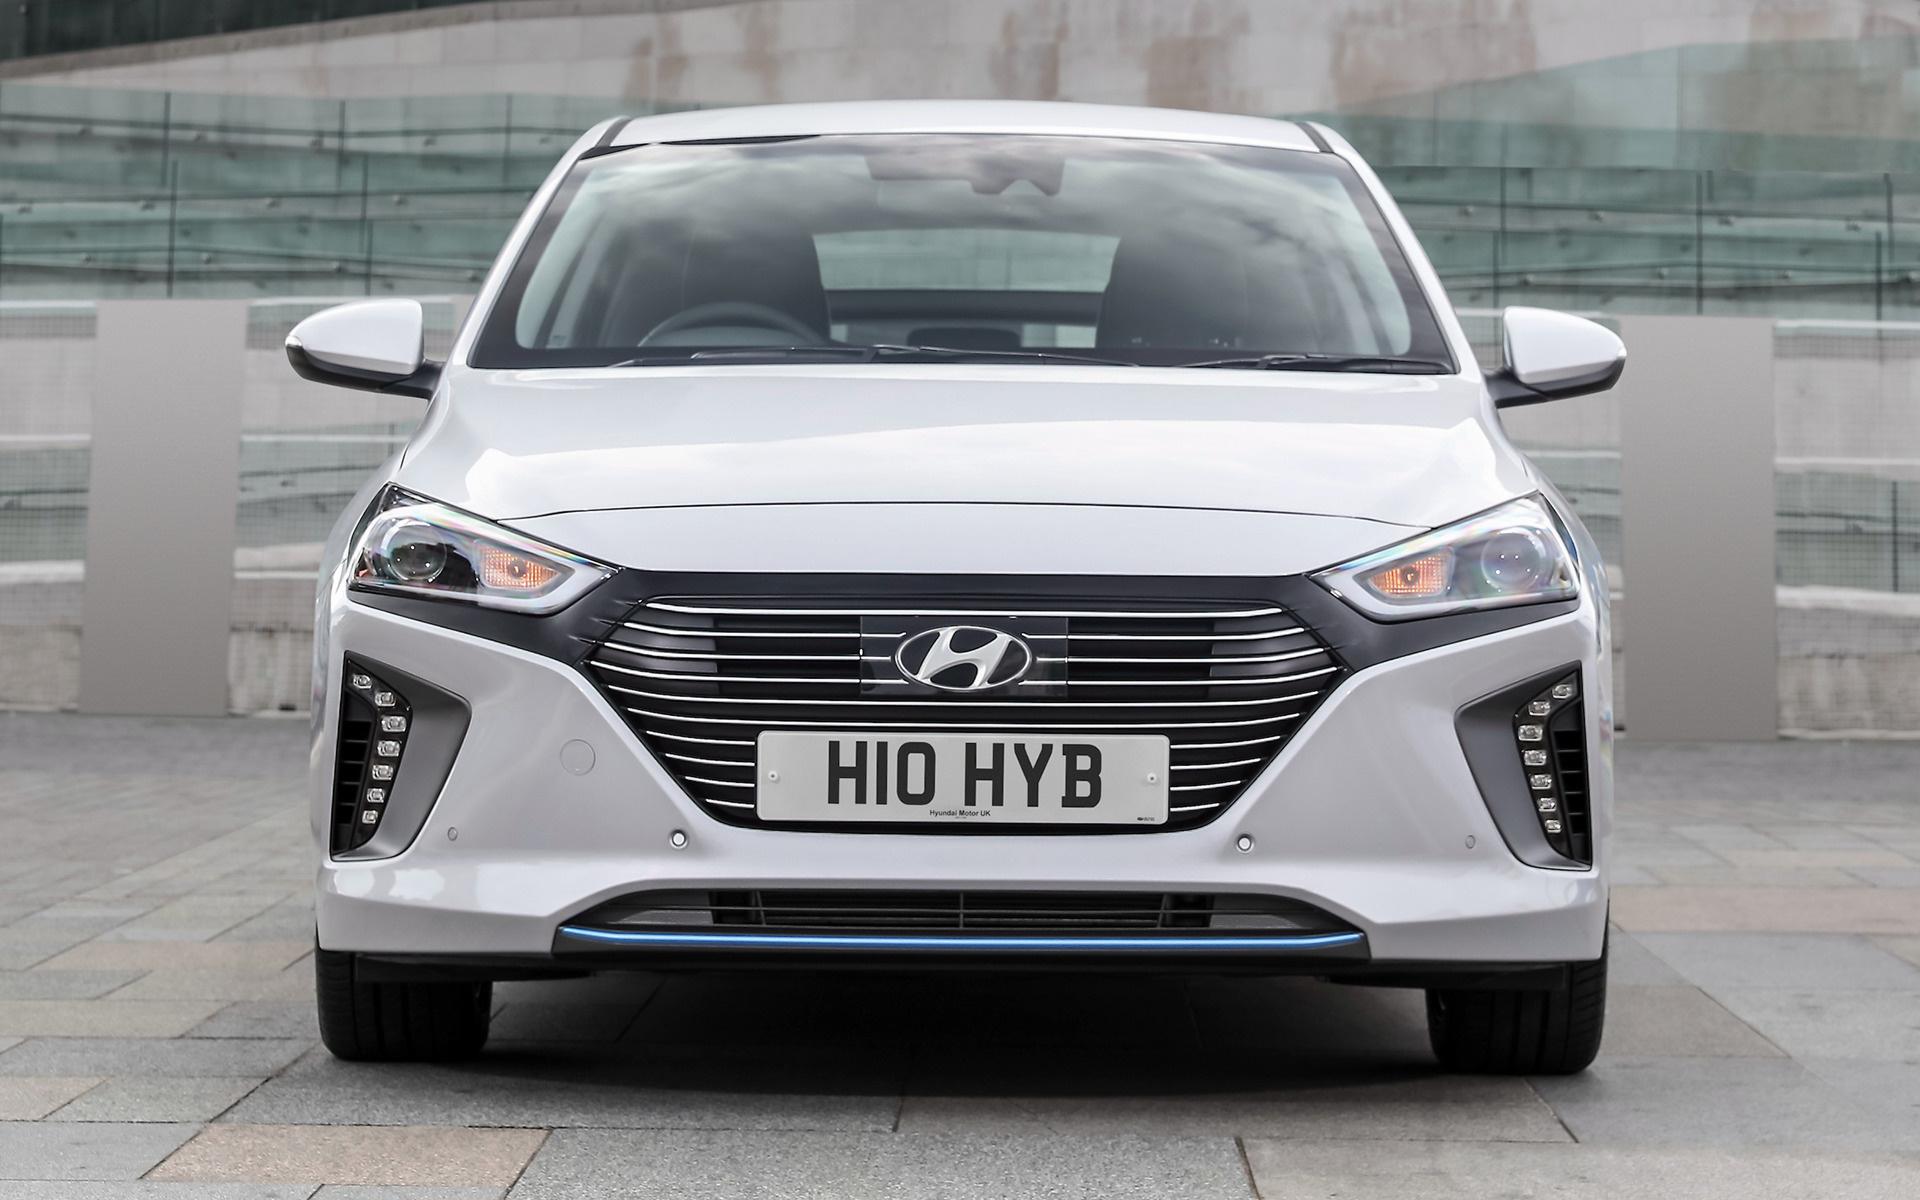 Hyundai Ioniq Hybrid (UK) and HD Image